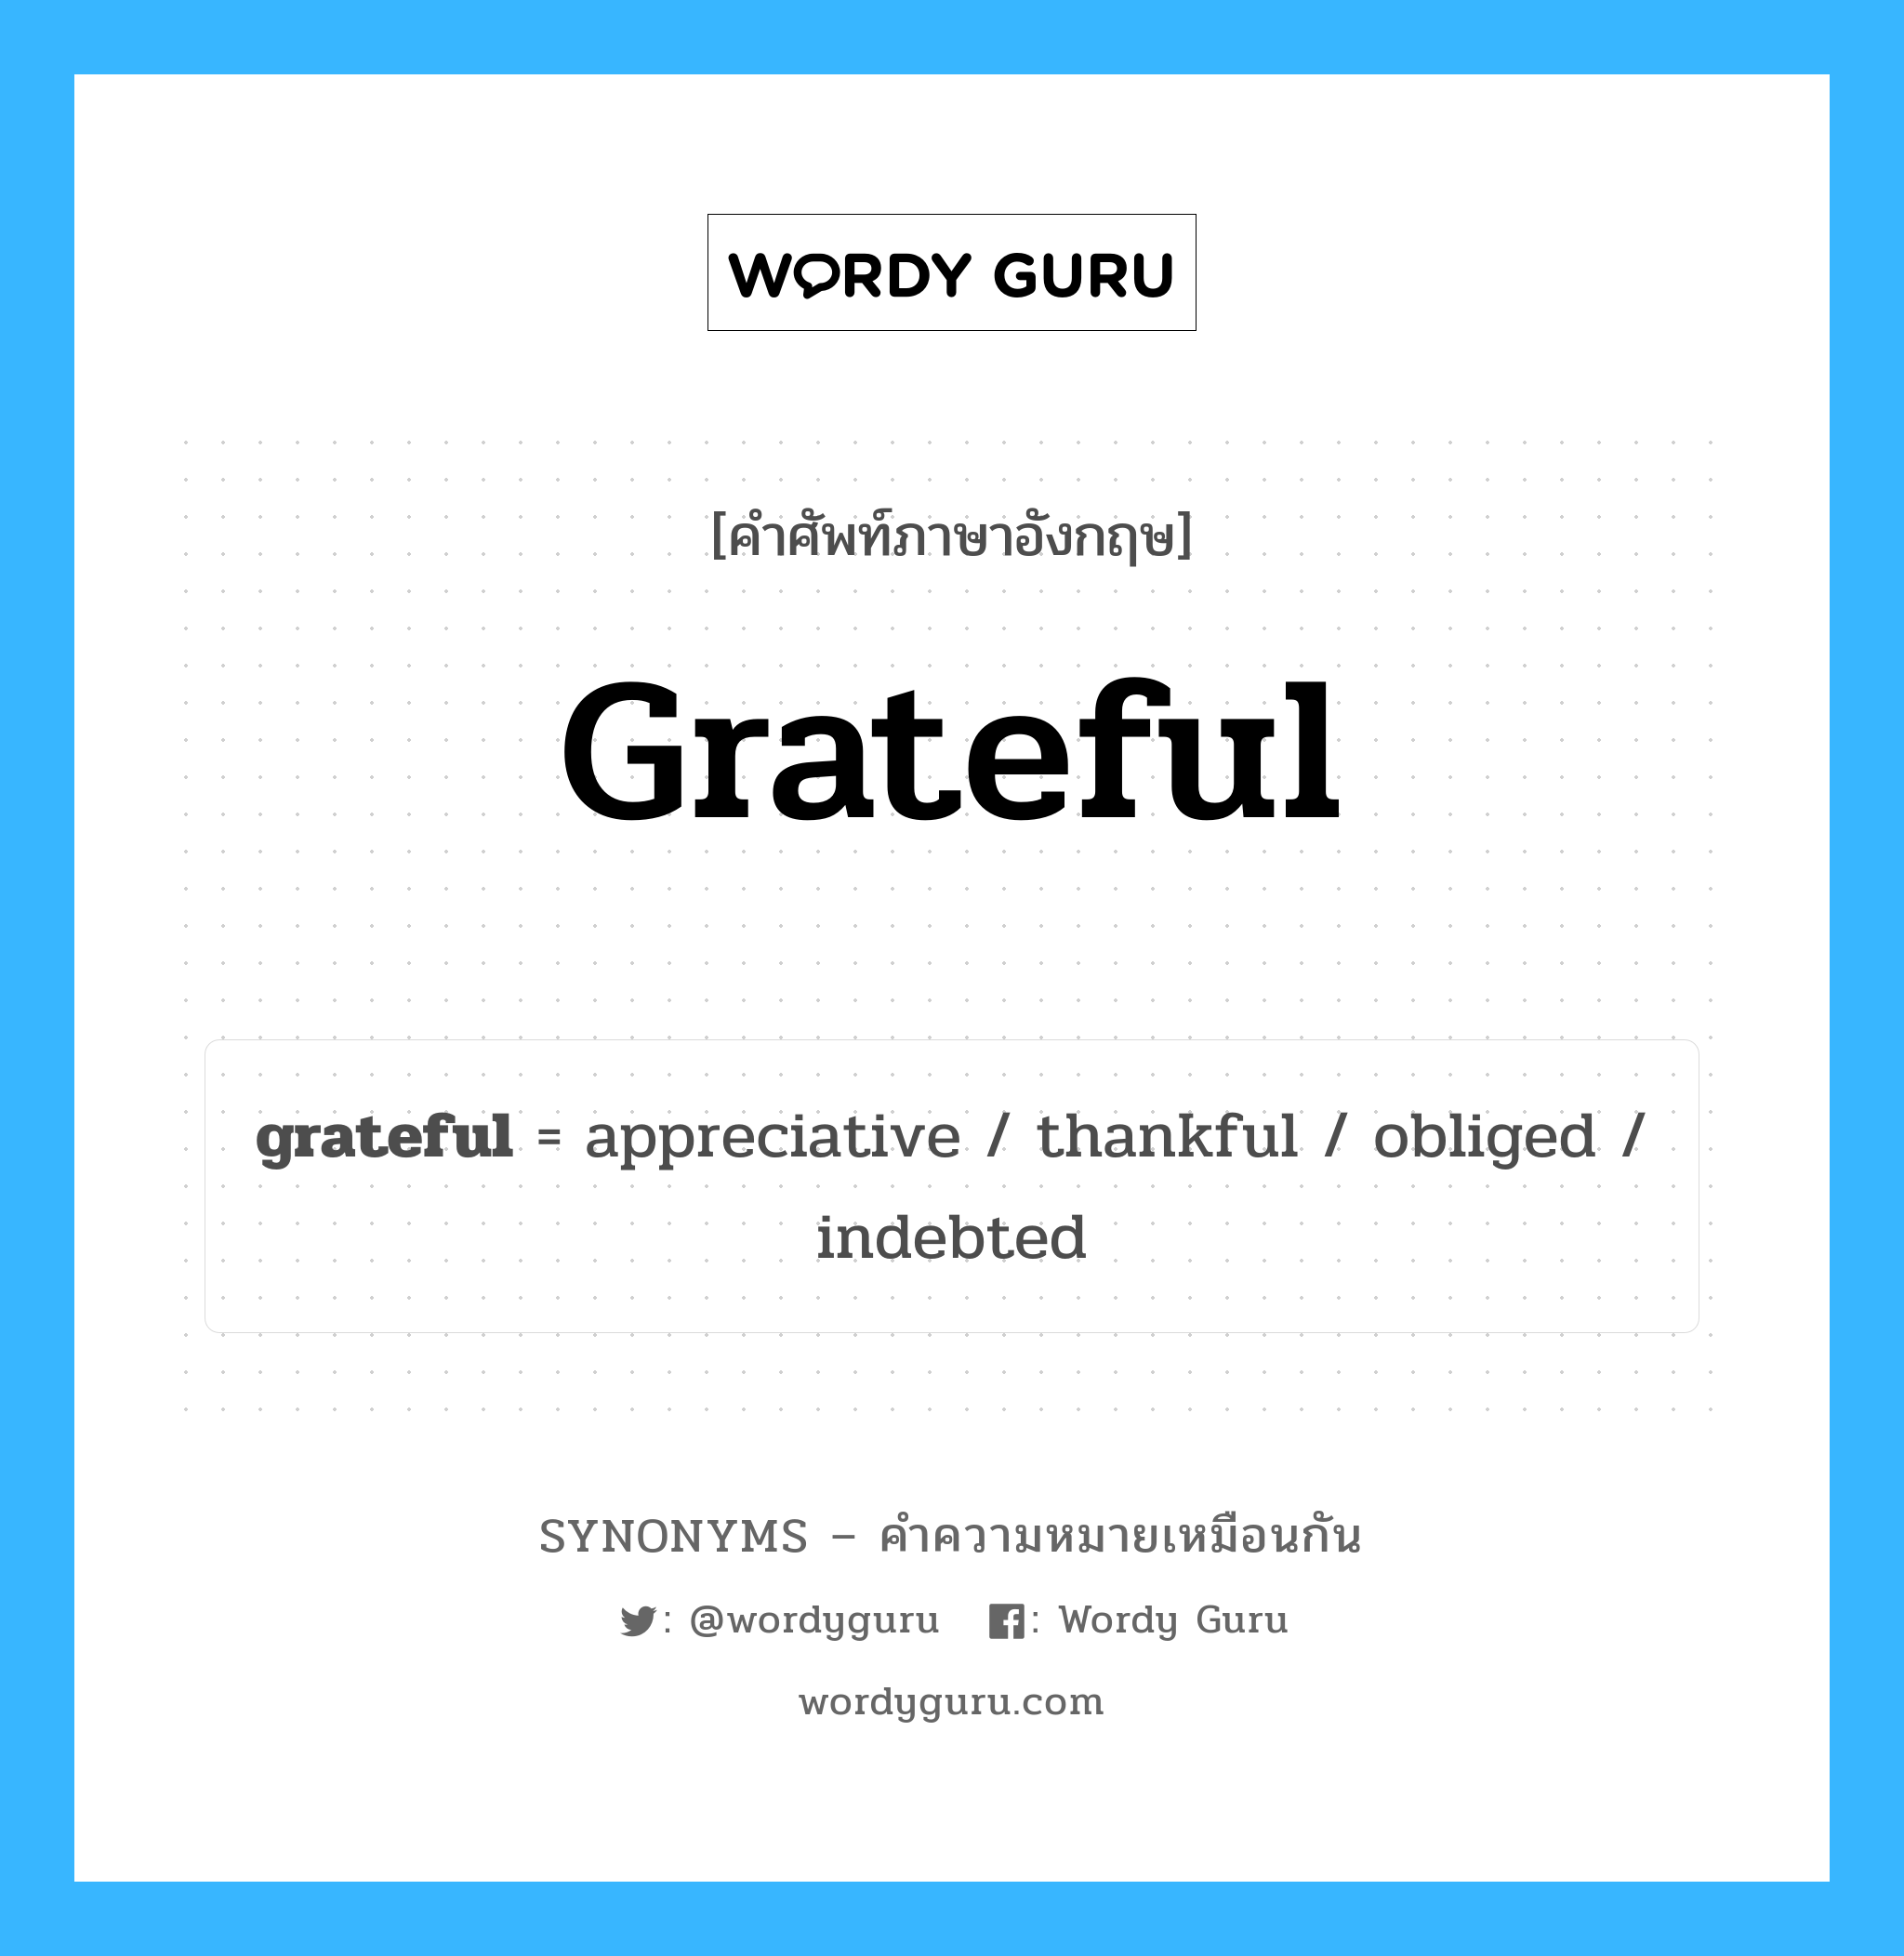 thankful เป็นหนึ่งใน grateful และมีคำอื่น ๆ อีกดังนี้, คำศัพท์ภาษาอังกฤษ thankful ความหมายคล้ายกันกับ grateful แปลว่า ขอบคุณ หมวด grateful